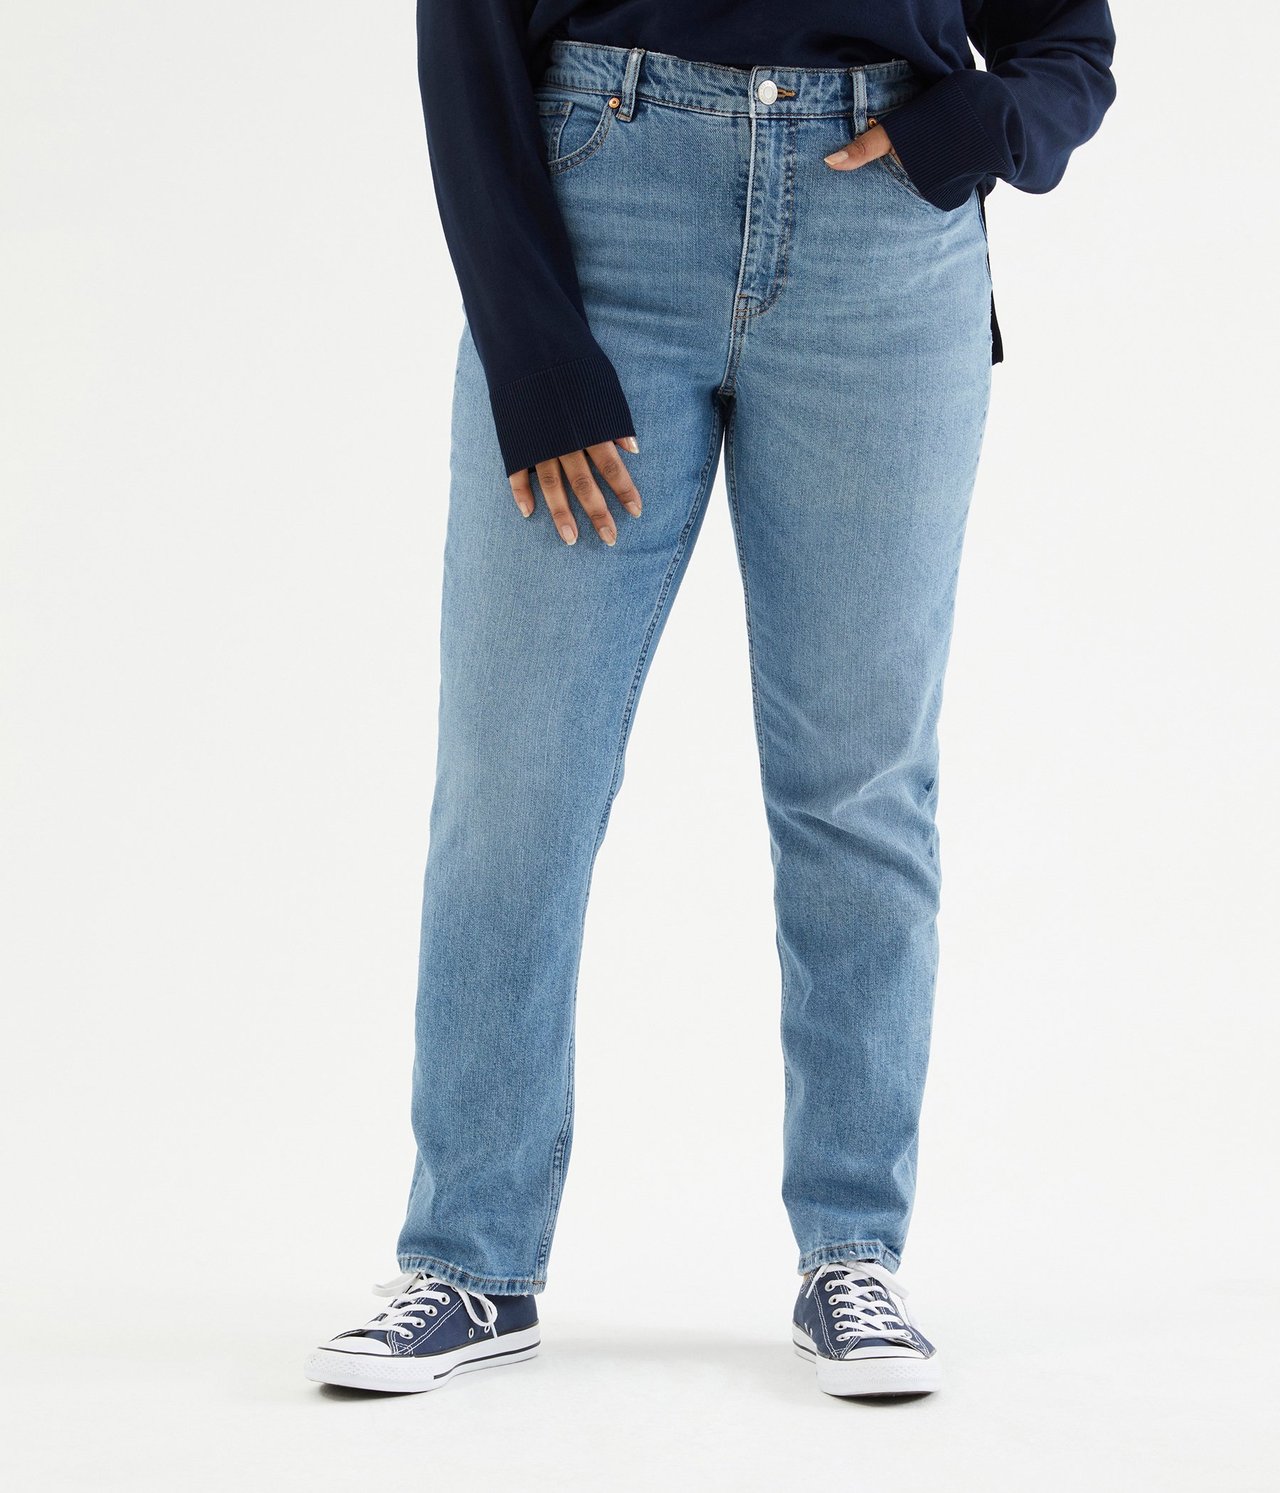 Jeans high waist tapered Lys denim - 34 - 6